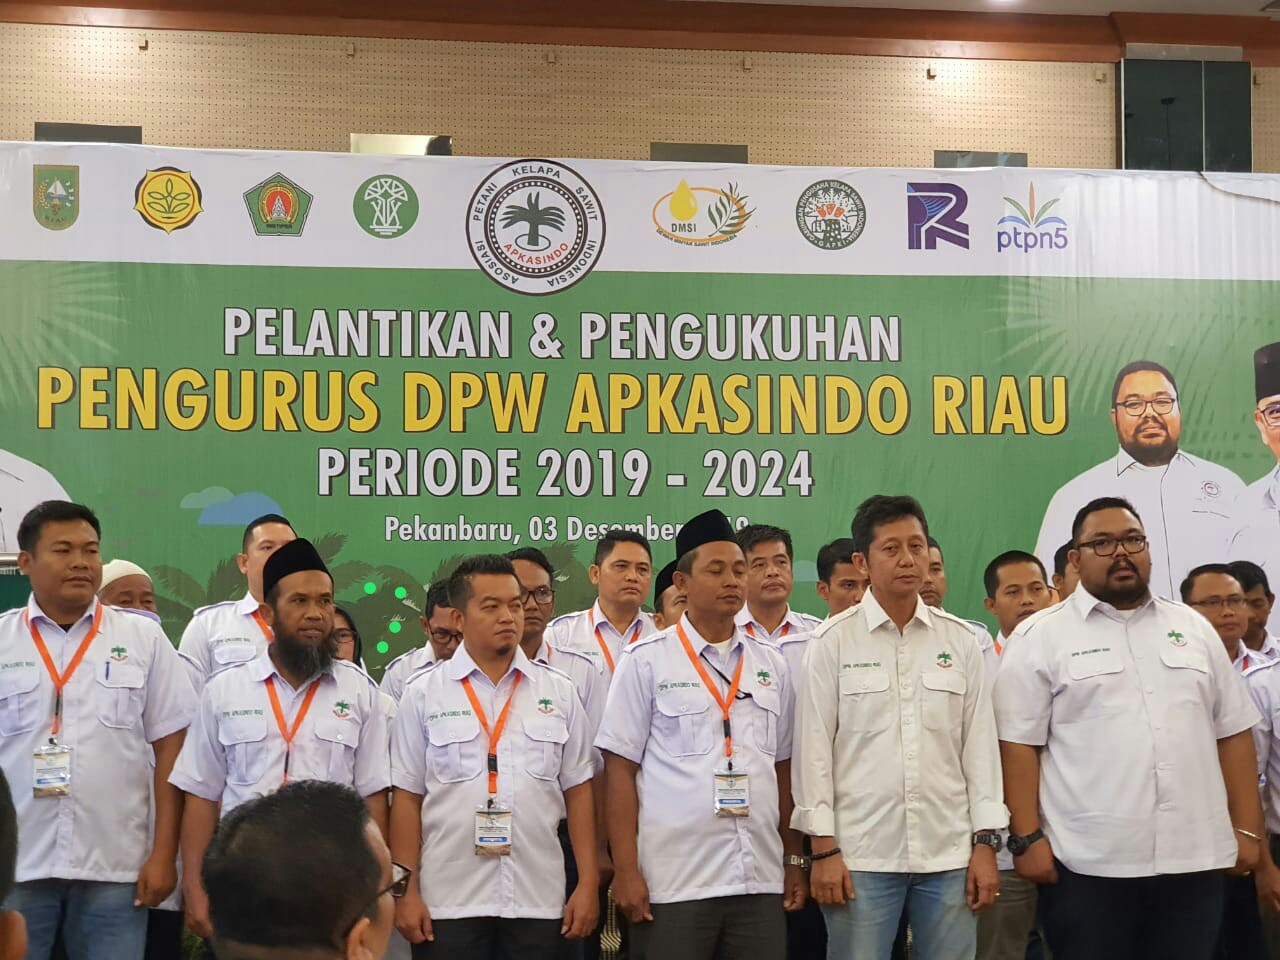 Pengurus DPW APKASINDO  Riau Periode 2019 - 2024 Resmi Dilantik